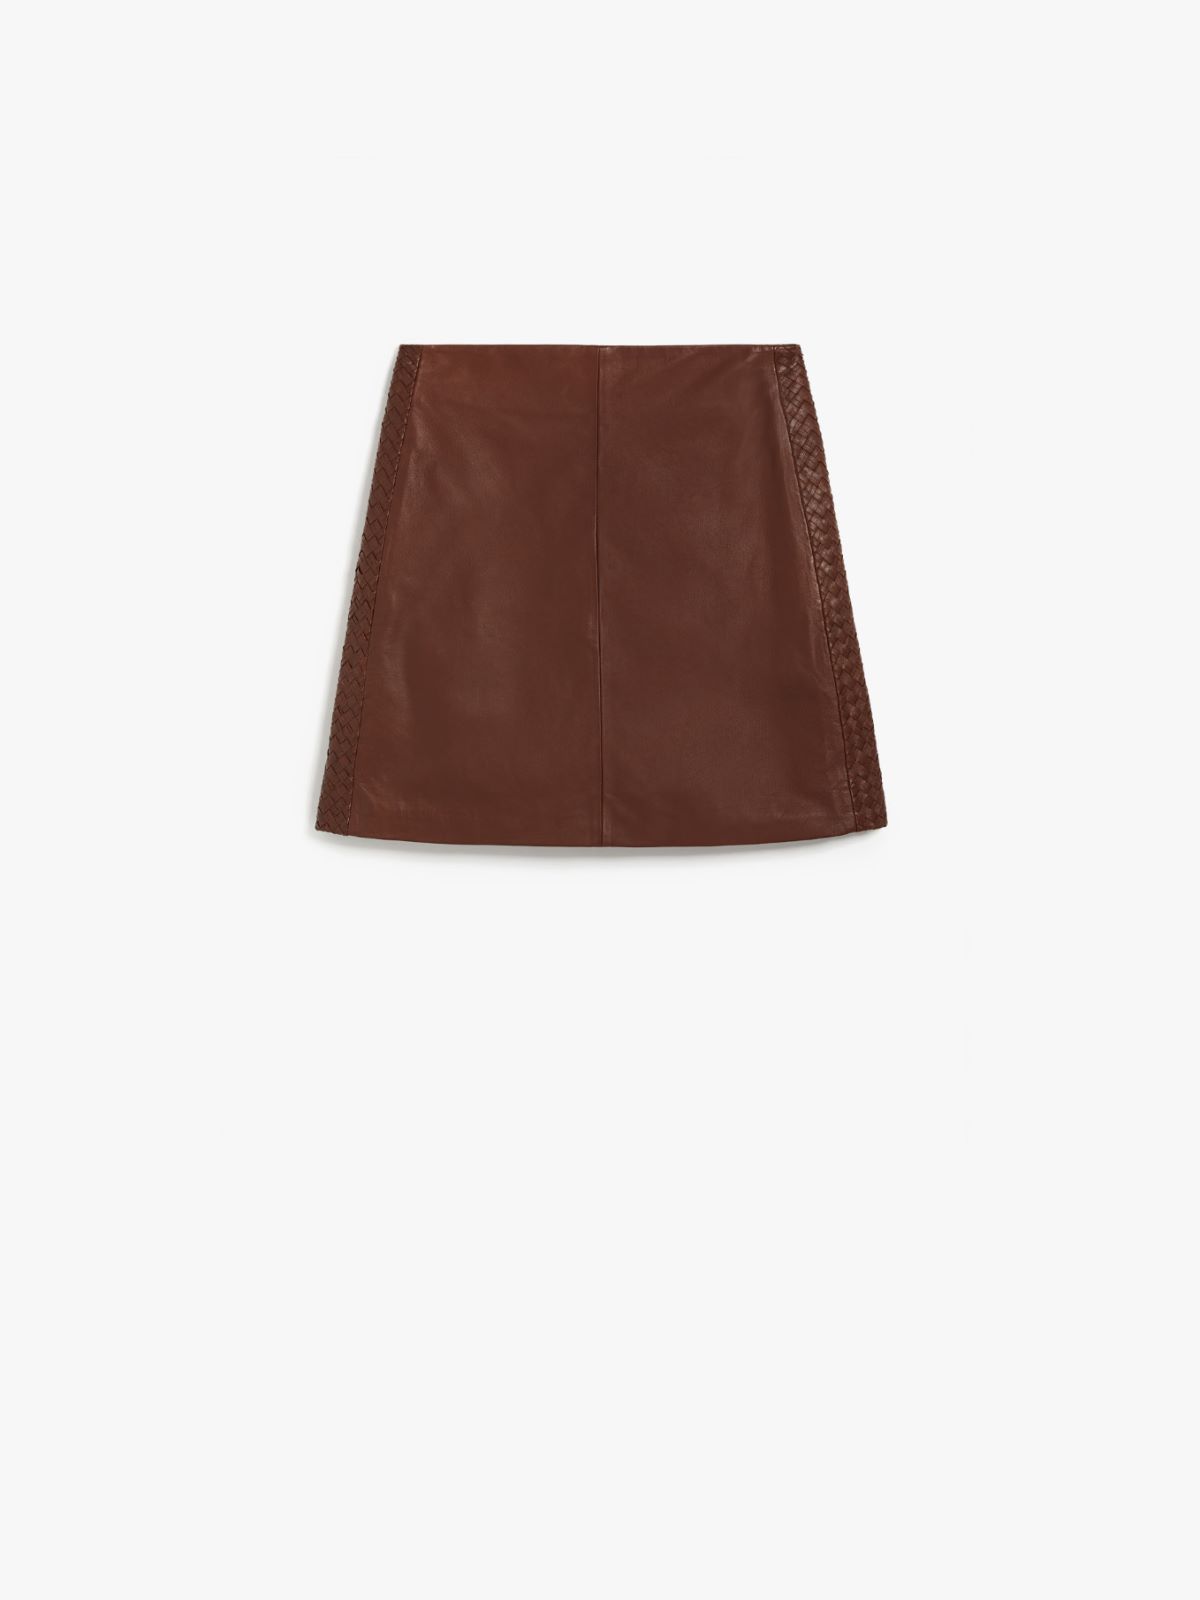 Nappa leather mini skirt - RUST - Weekend Max Mara - 5